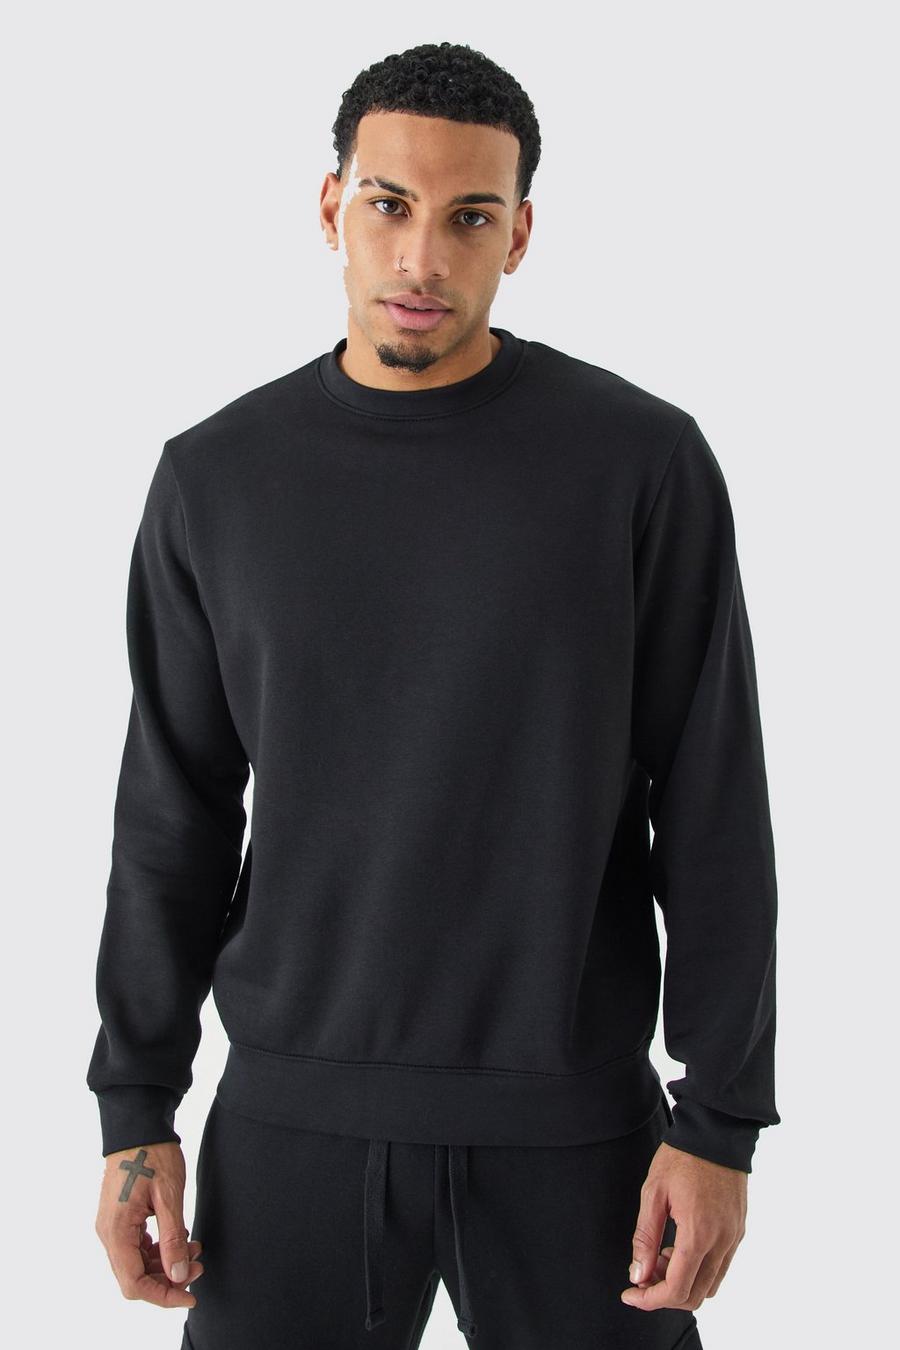 Black Basic Crew Neck Sweatshirt